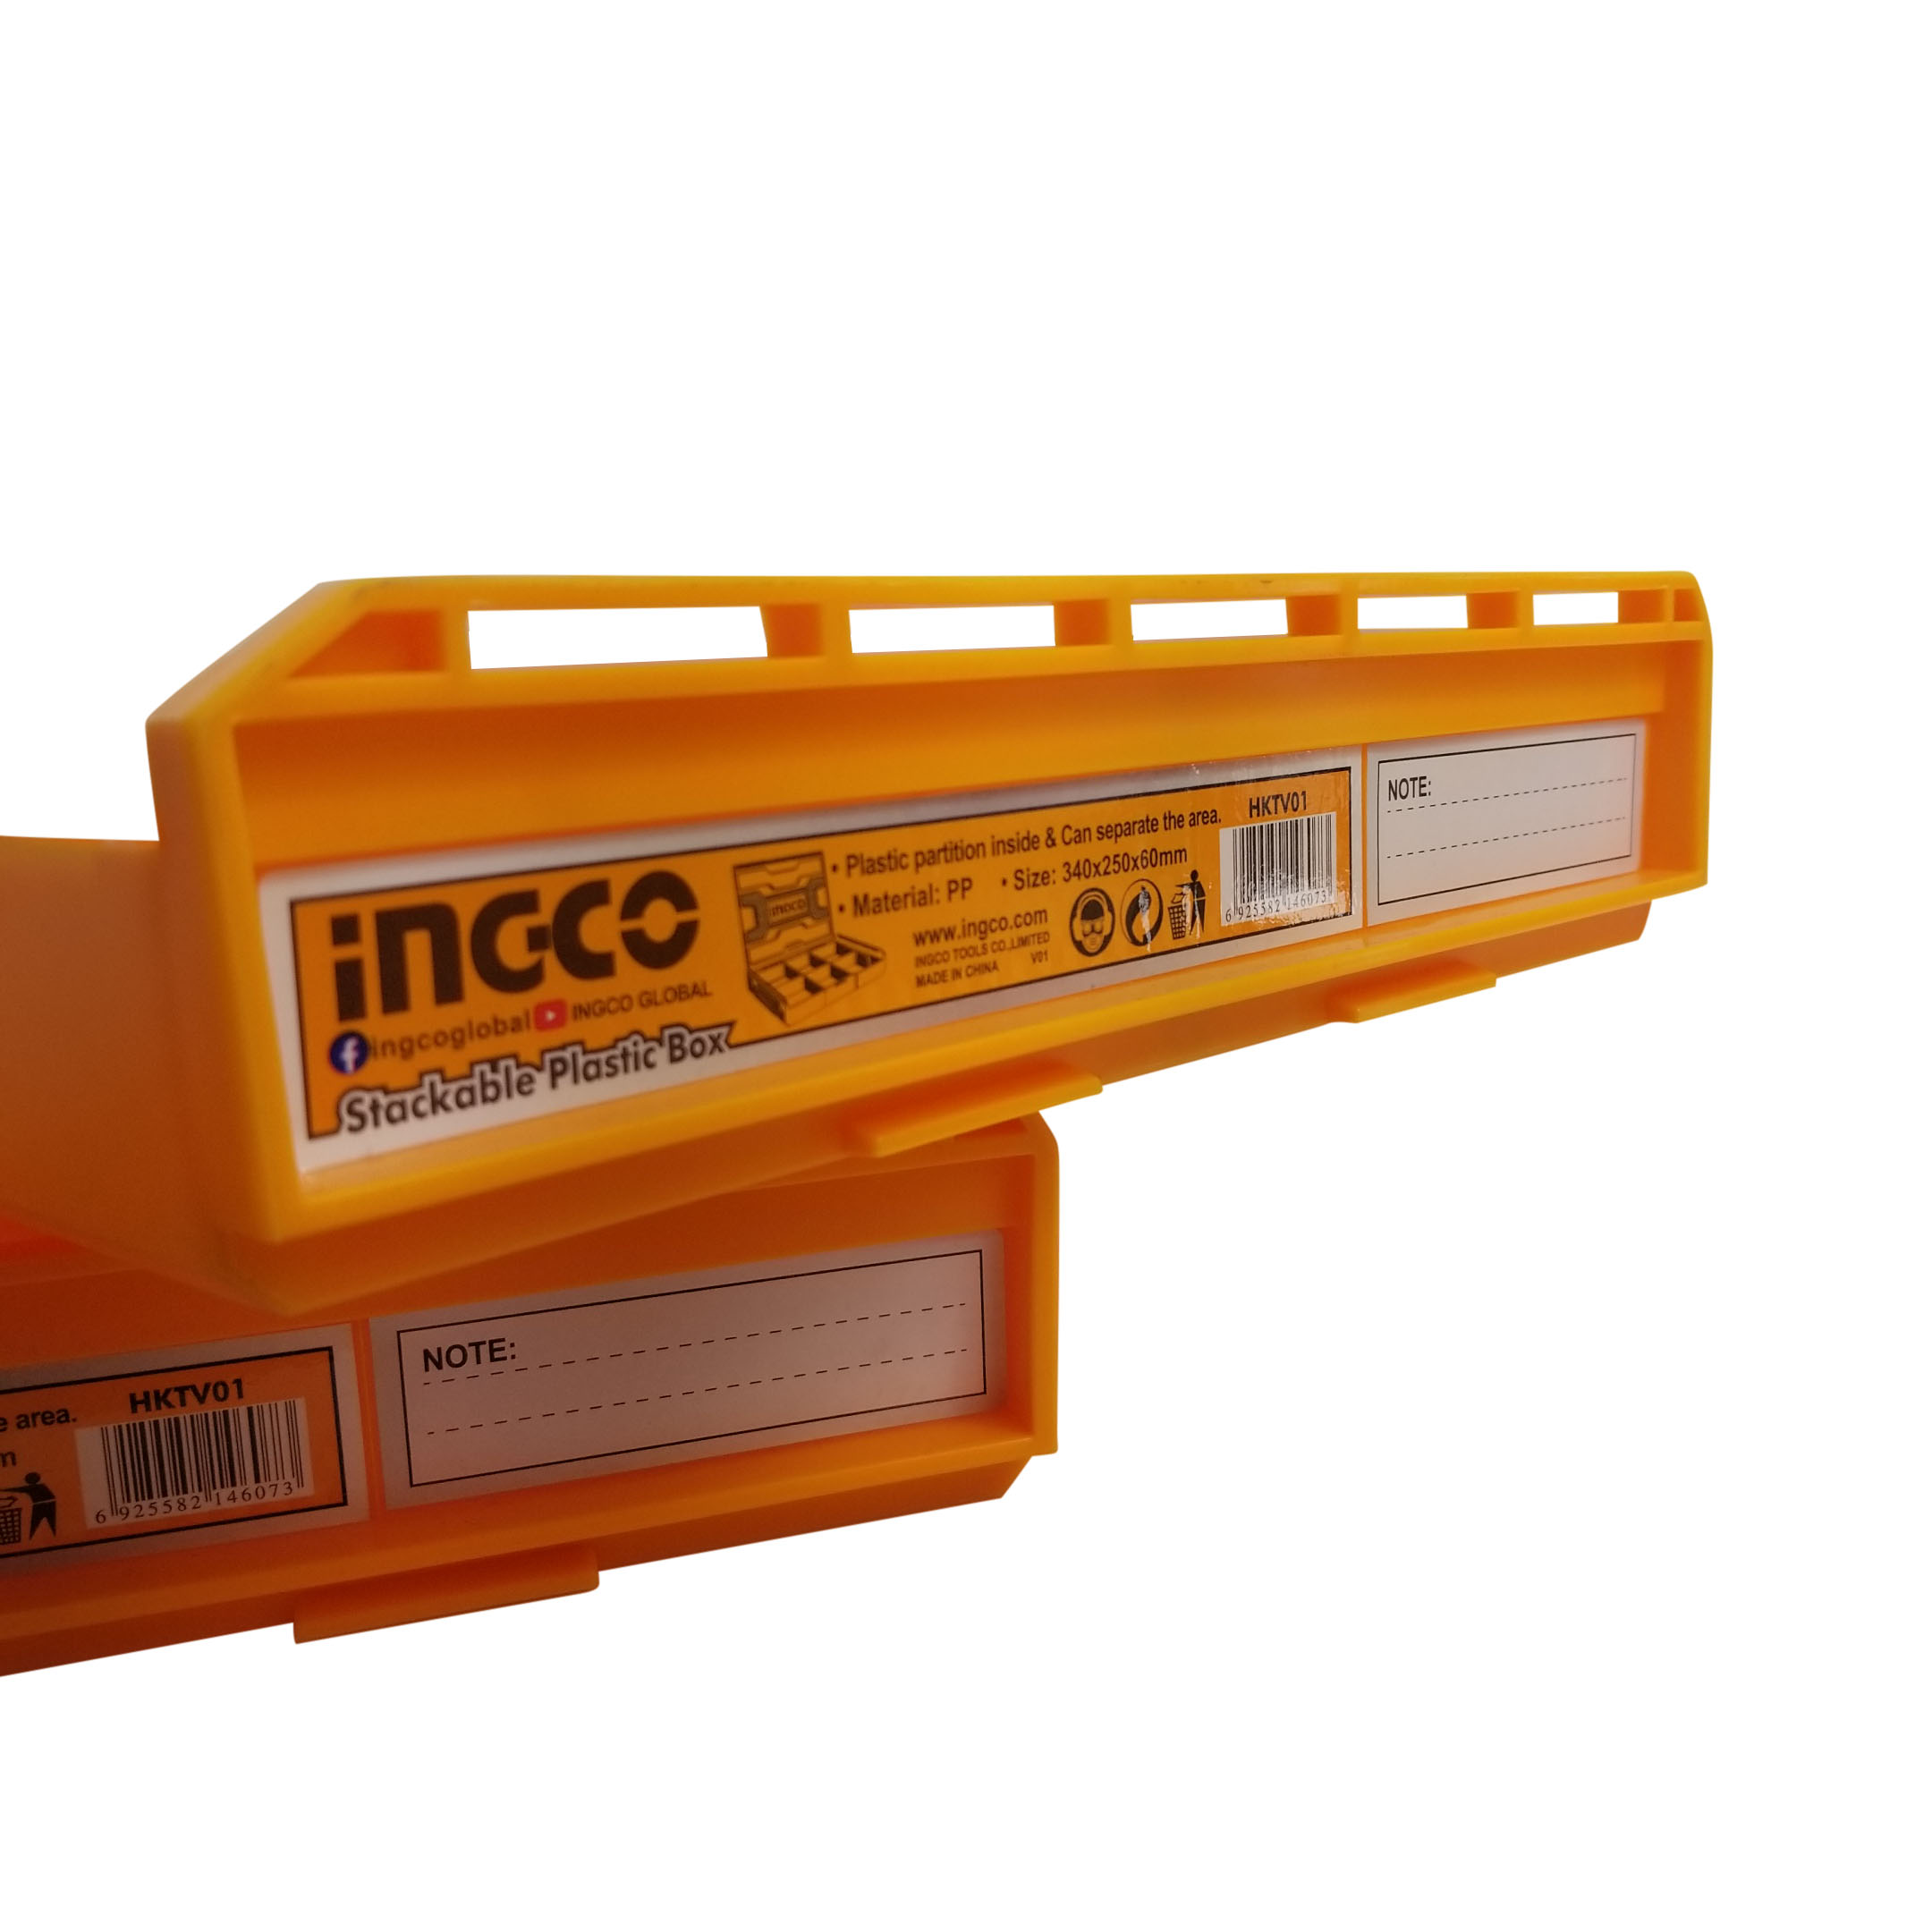 INGCO Stackable Plastic Box - INGCO Tools St Lucia - ingcotoolsslu.com